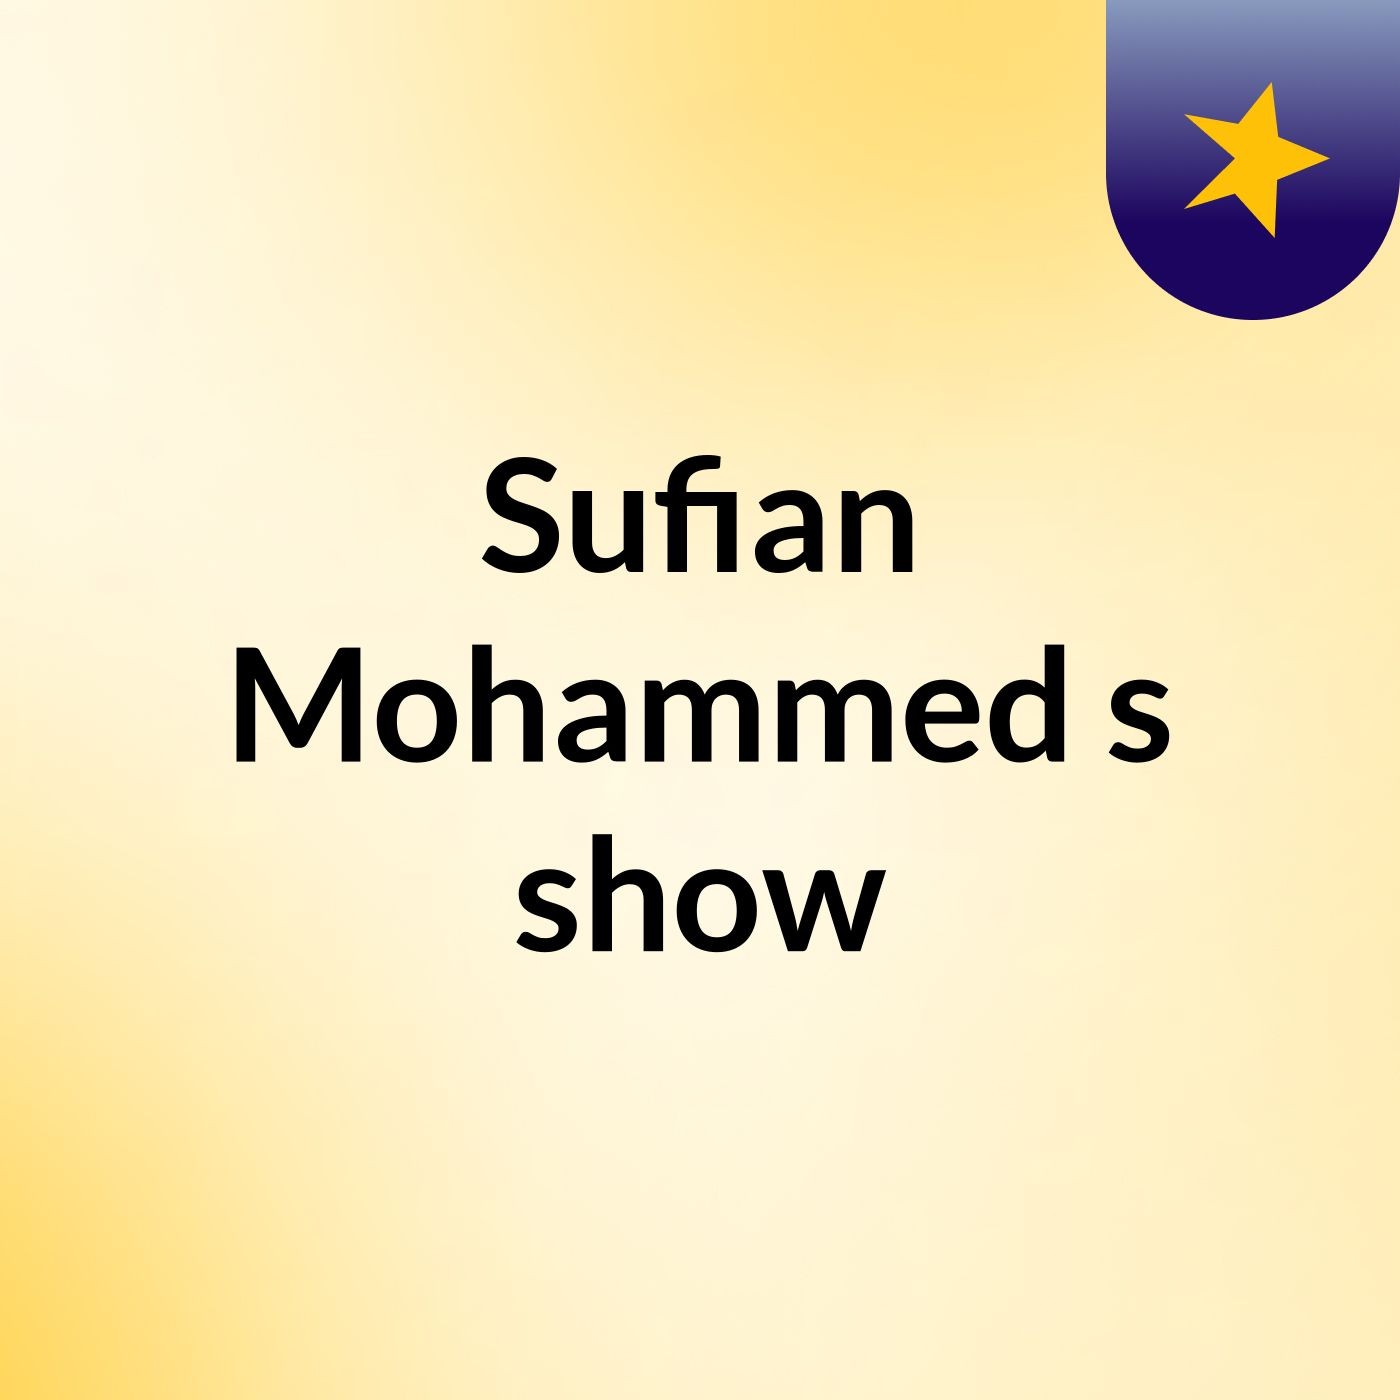 Episode 4 - Sufian Mohammed's show